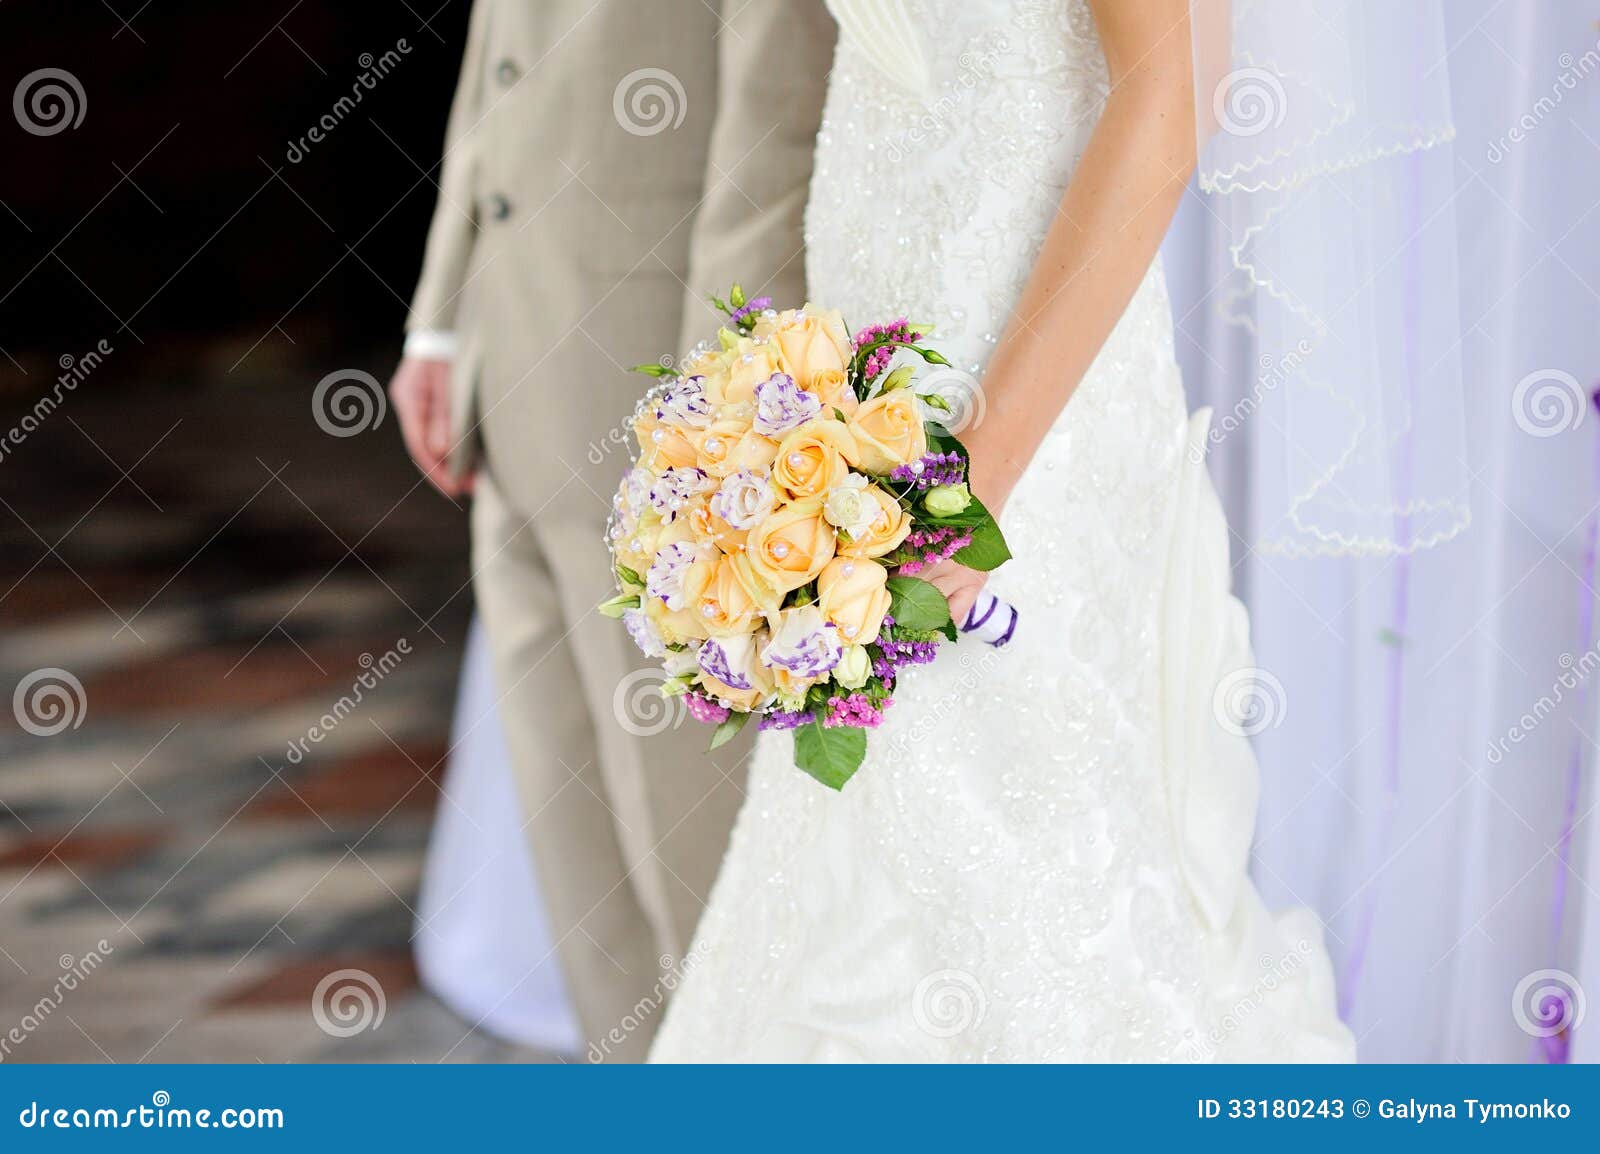 Bride Holding Wedding Bouquet Stock Image - Image of dress, honeymoon ...